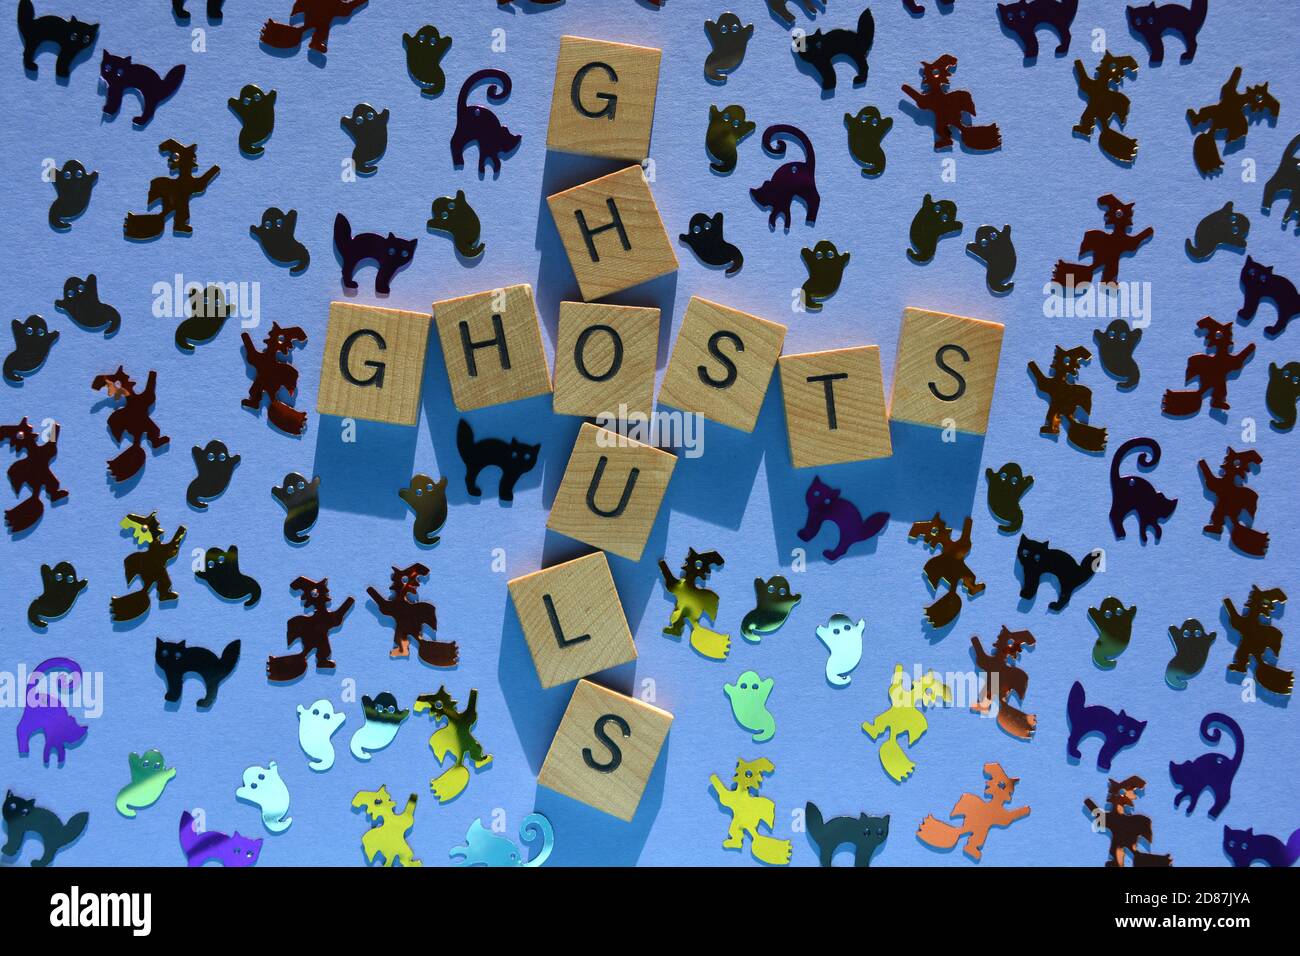 Ghouls, Ghosts, parole in lettere alfabetiche in legno in forma di crossword circondate da forme casuali a tema di Halloween Foto Stock